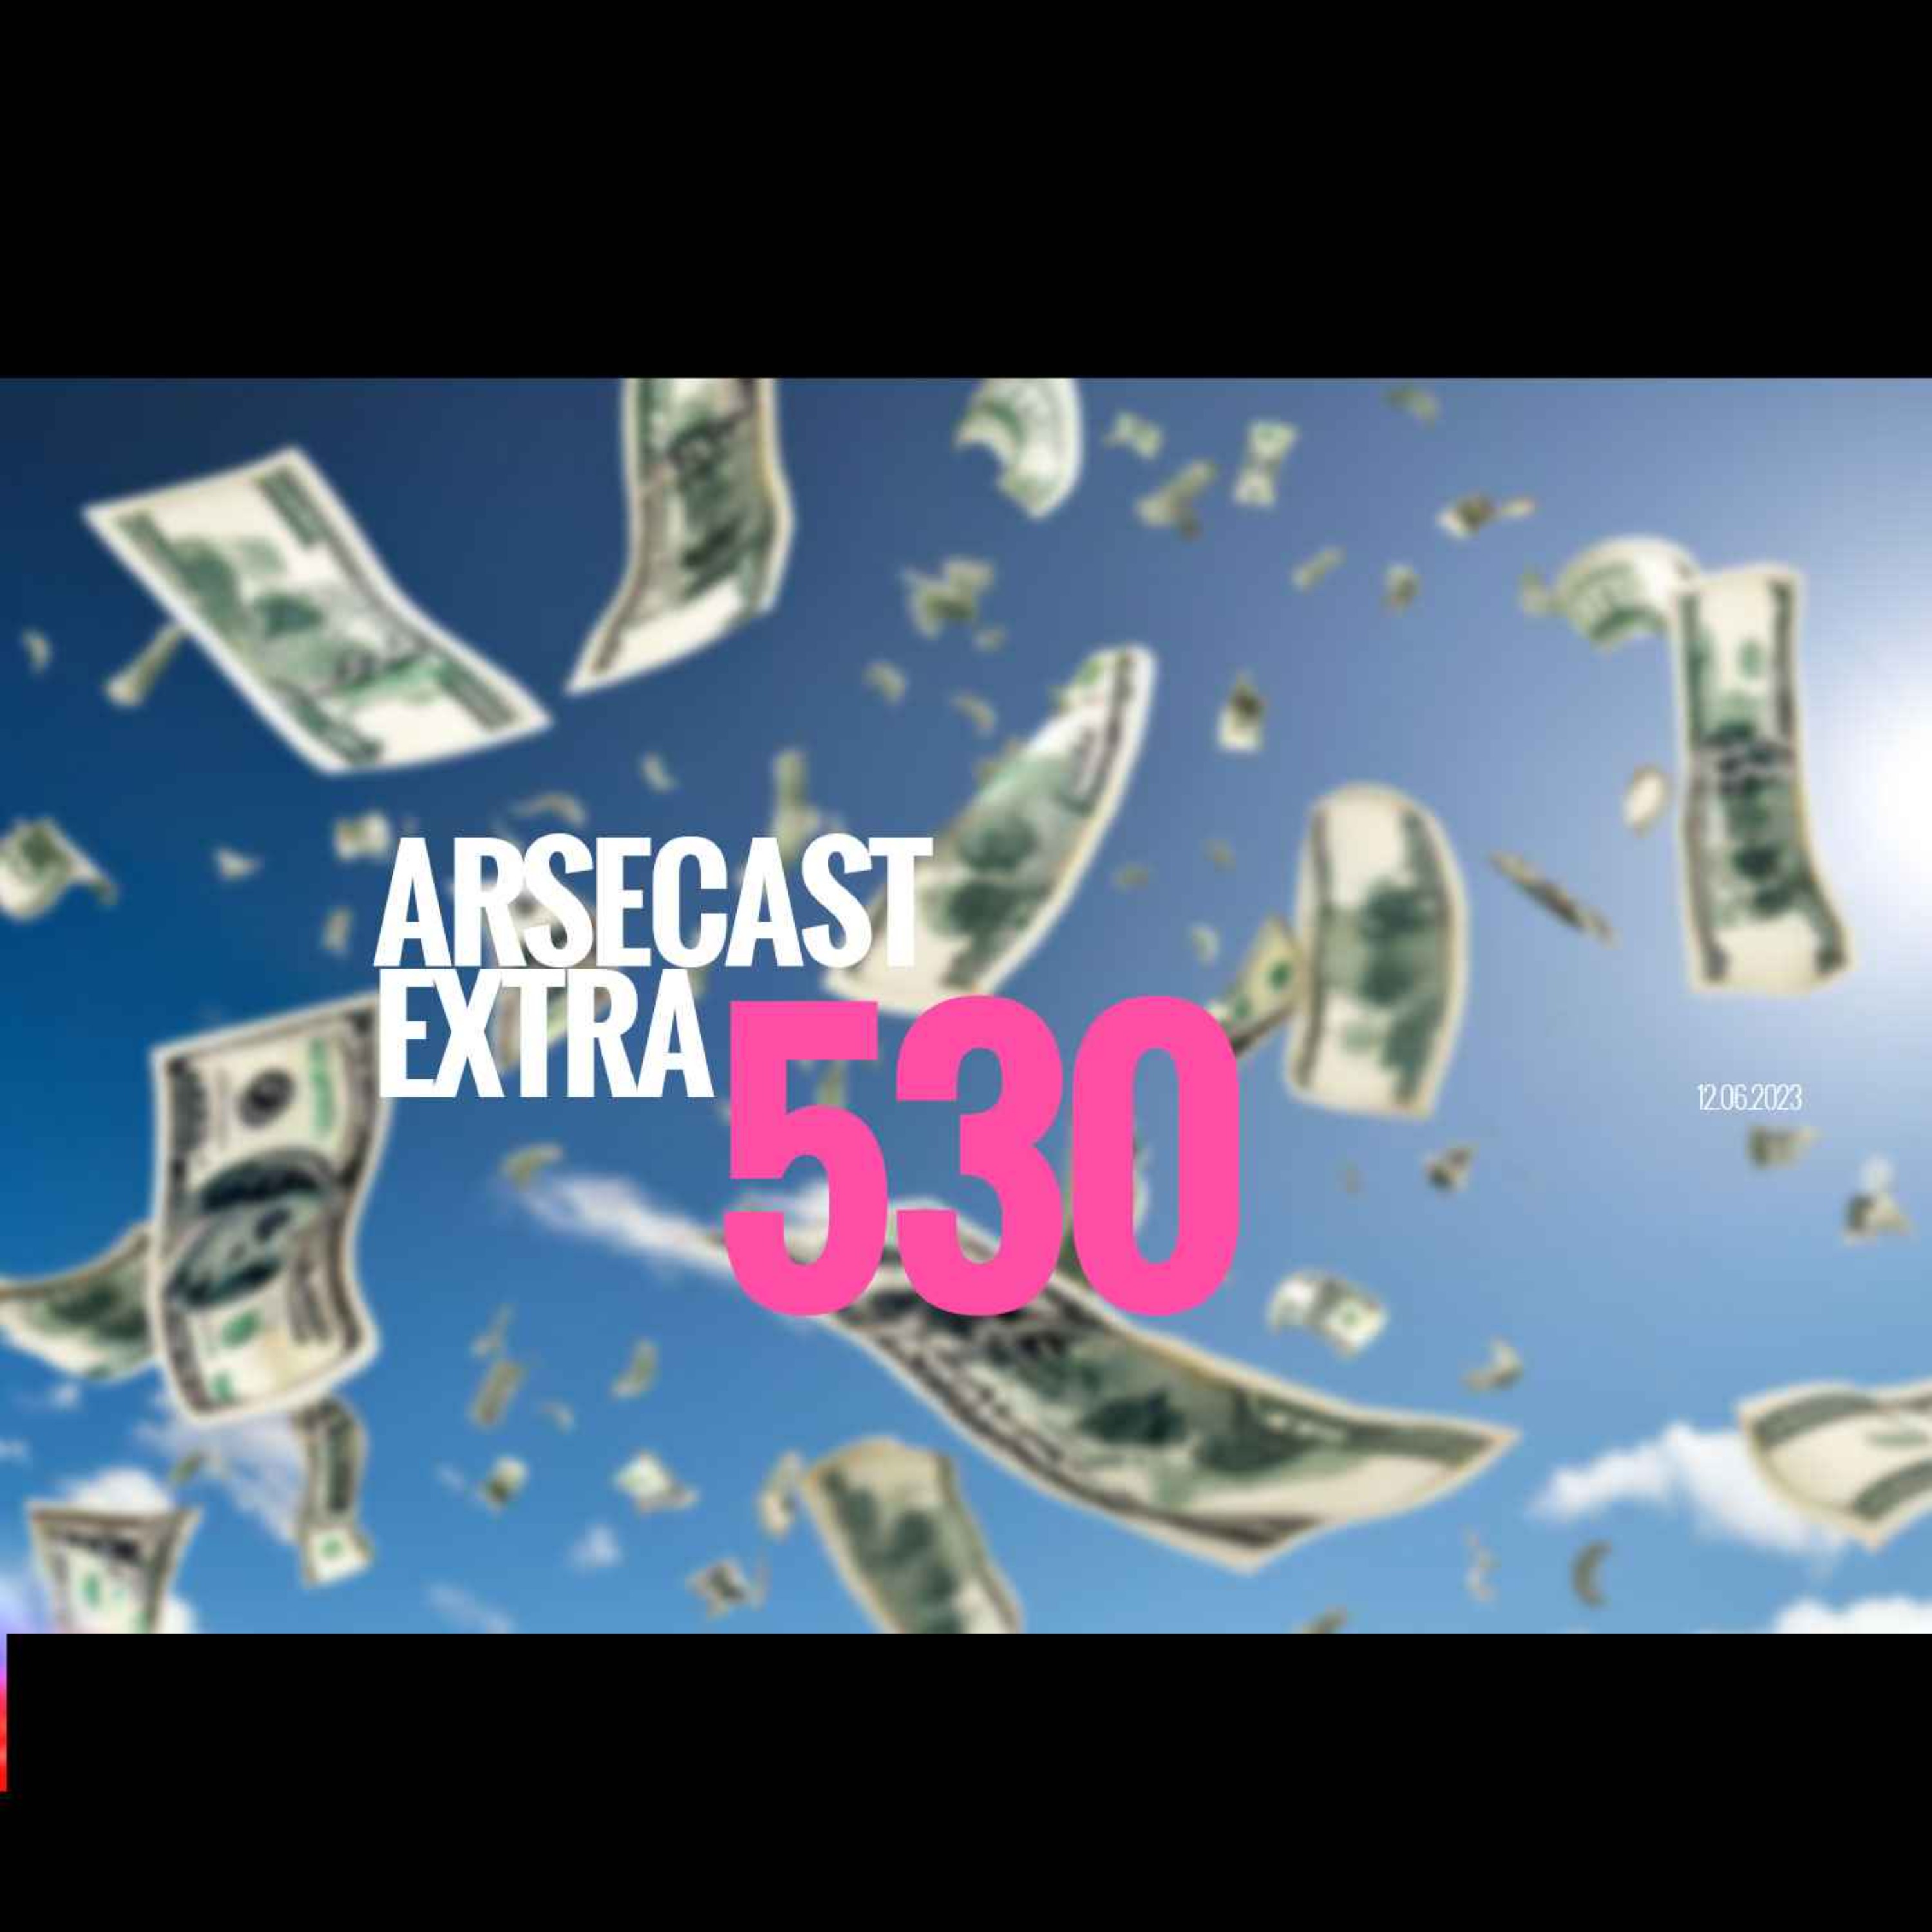 Arsecast Extra Episode 530 - 12.06.2023